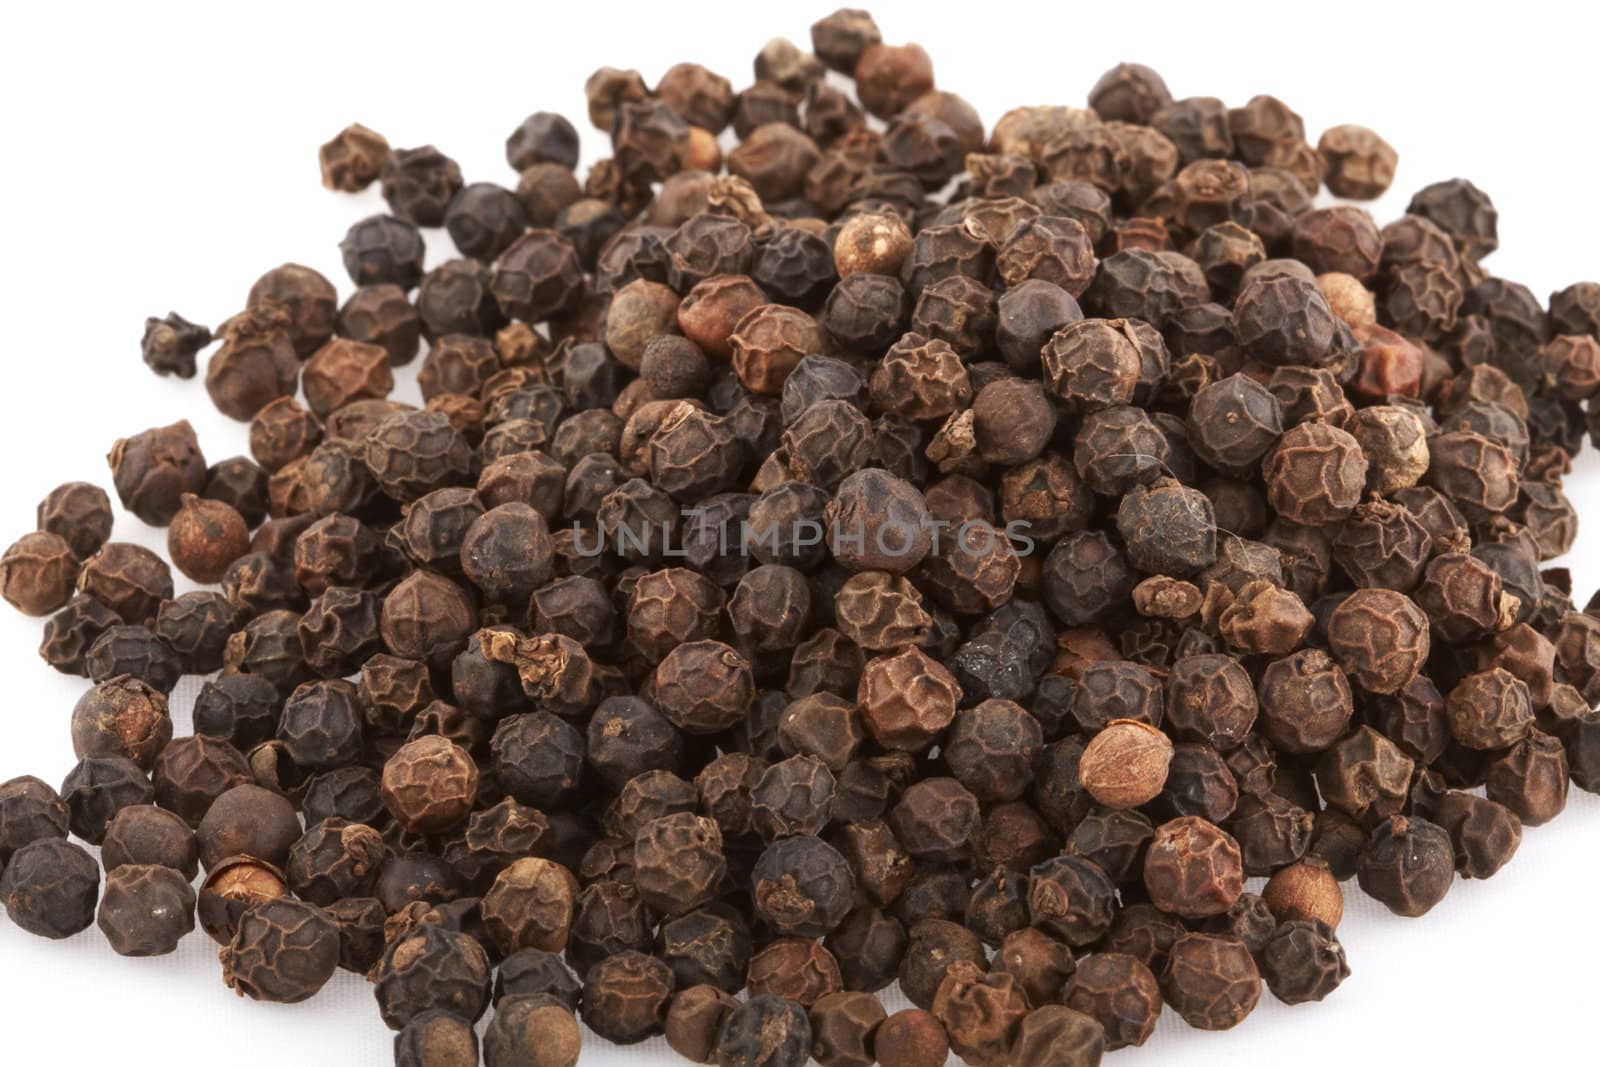 Black Peppercorn seeds on white